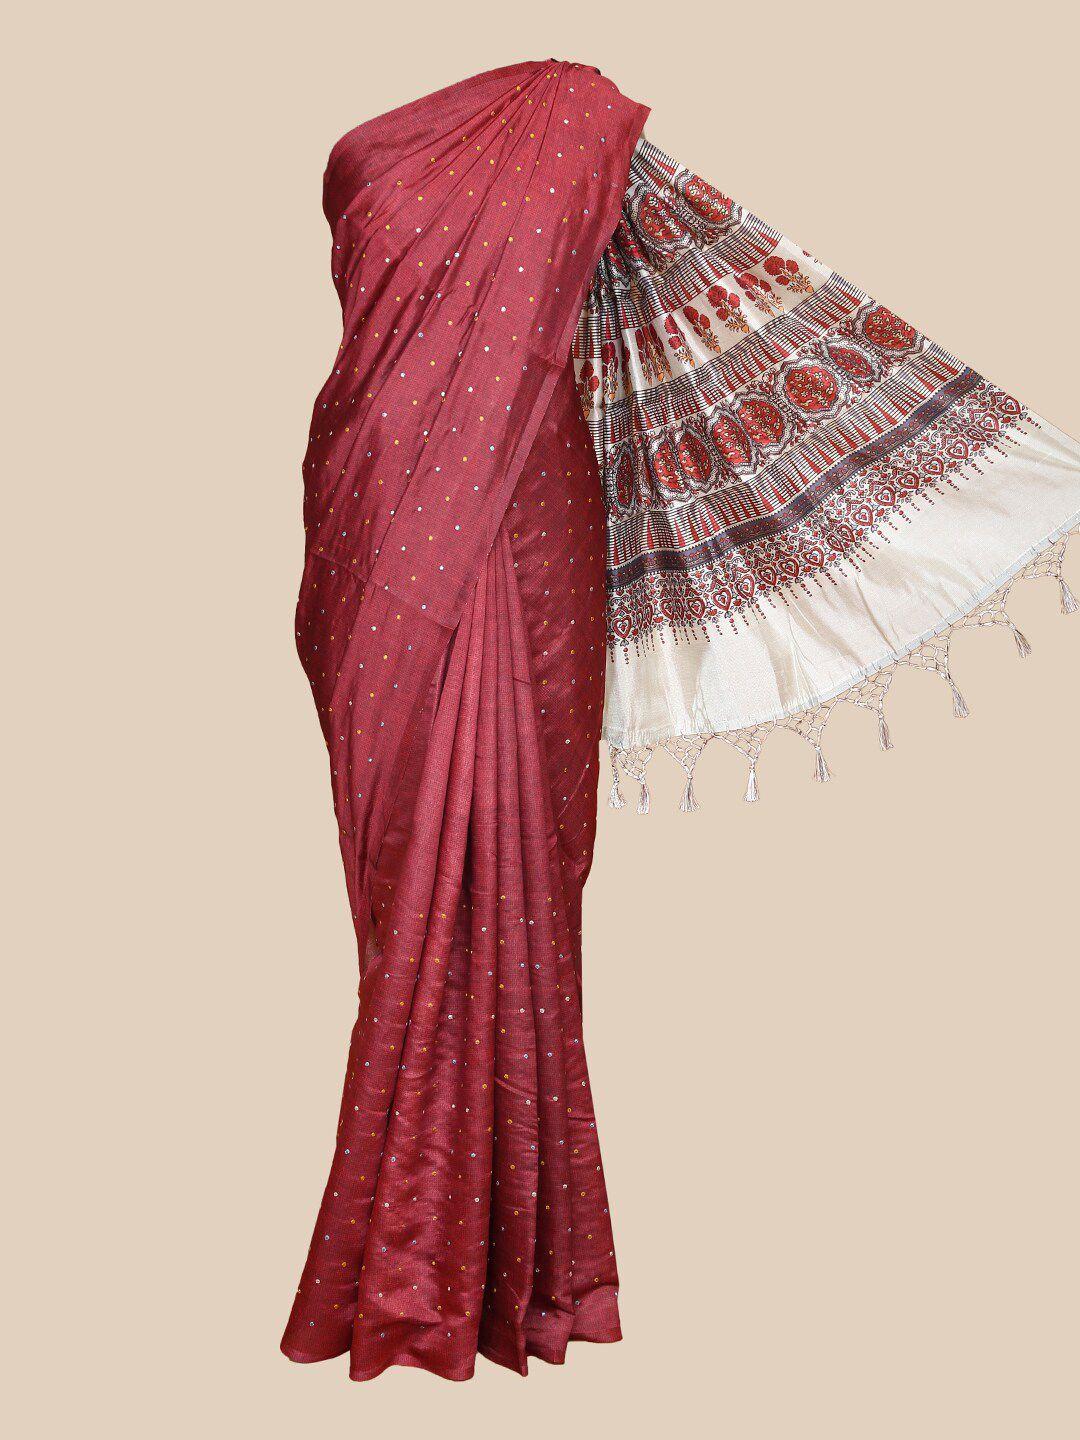 the-chennai-silks-maroon-&-orange-embellished-beads-and-stones-saree